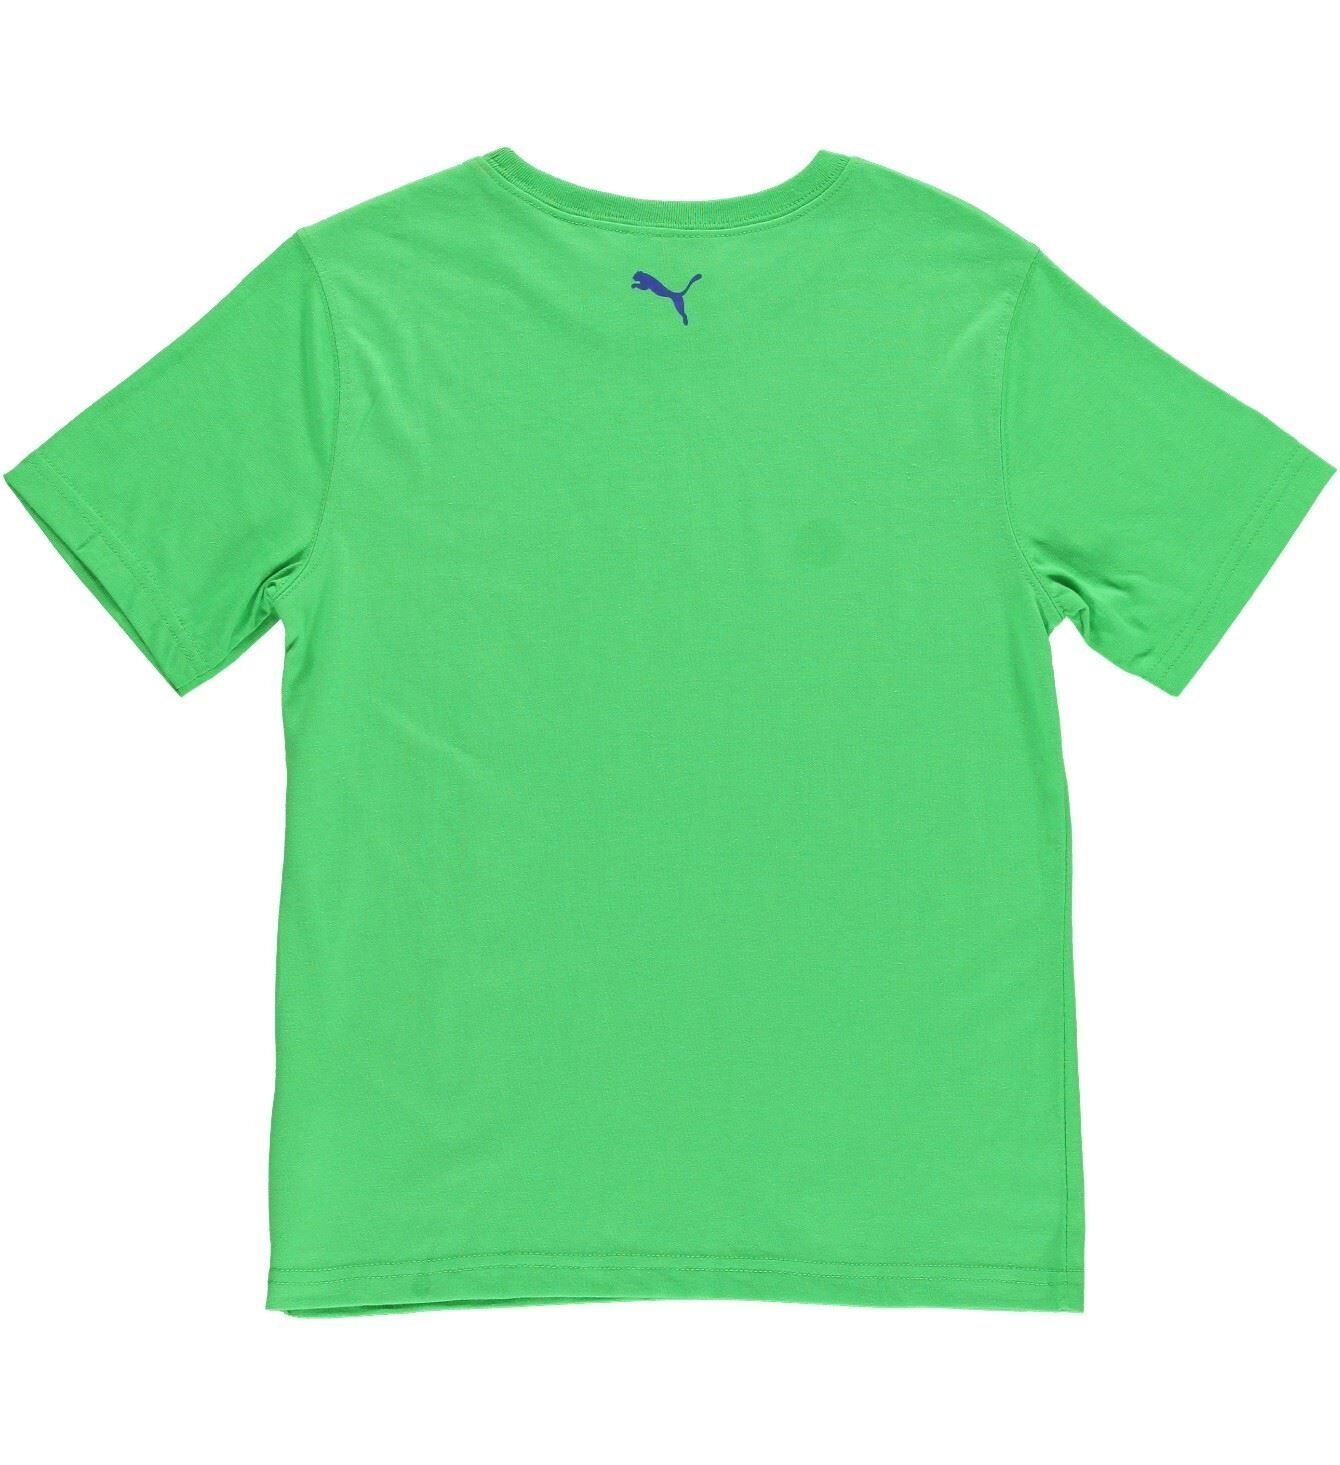 Puma Boys Sports T-Shirt Classic Green Medium Size - $19.75